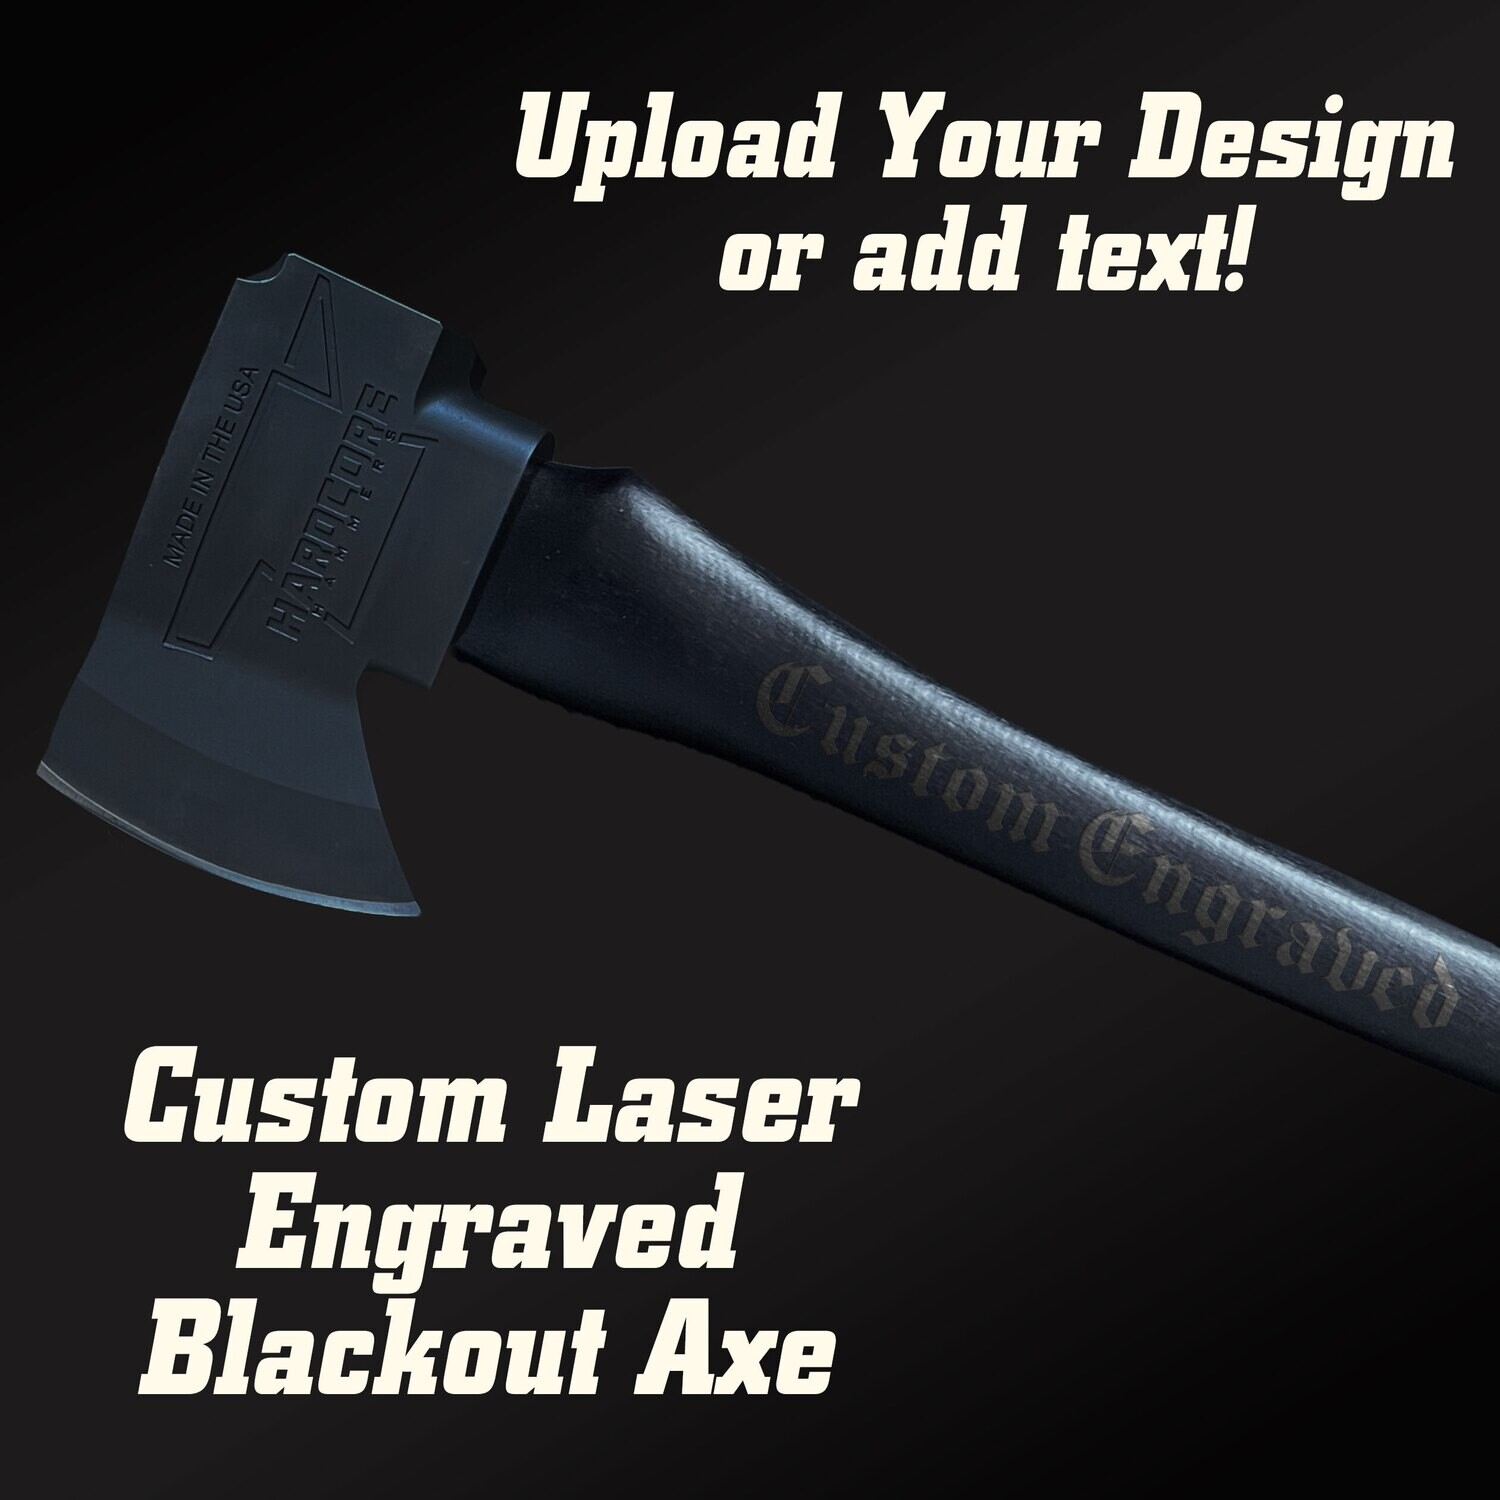 Custom Engraved Blackout Axe